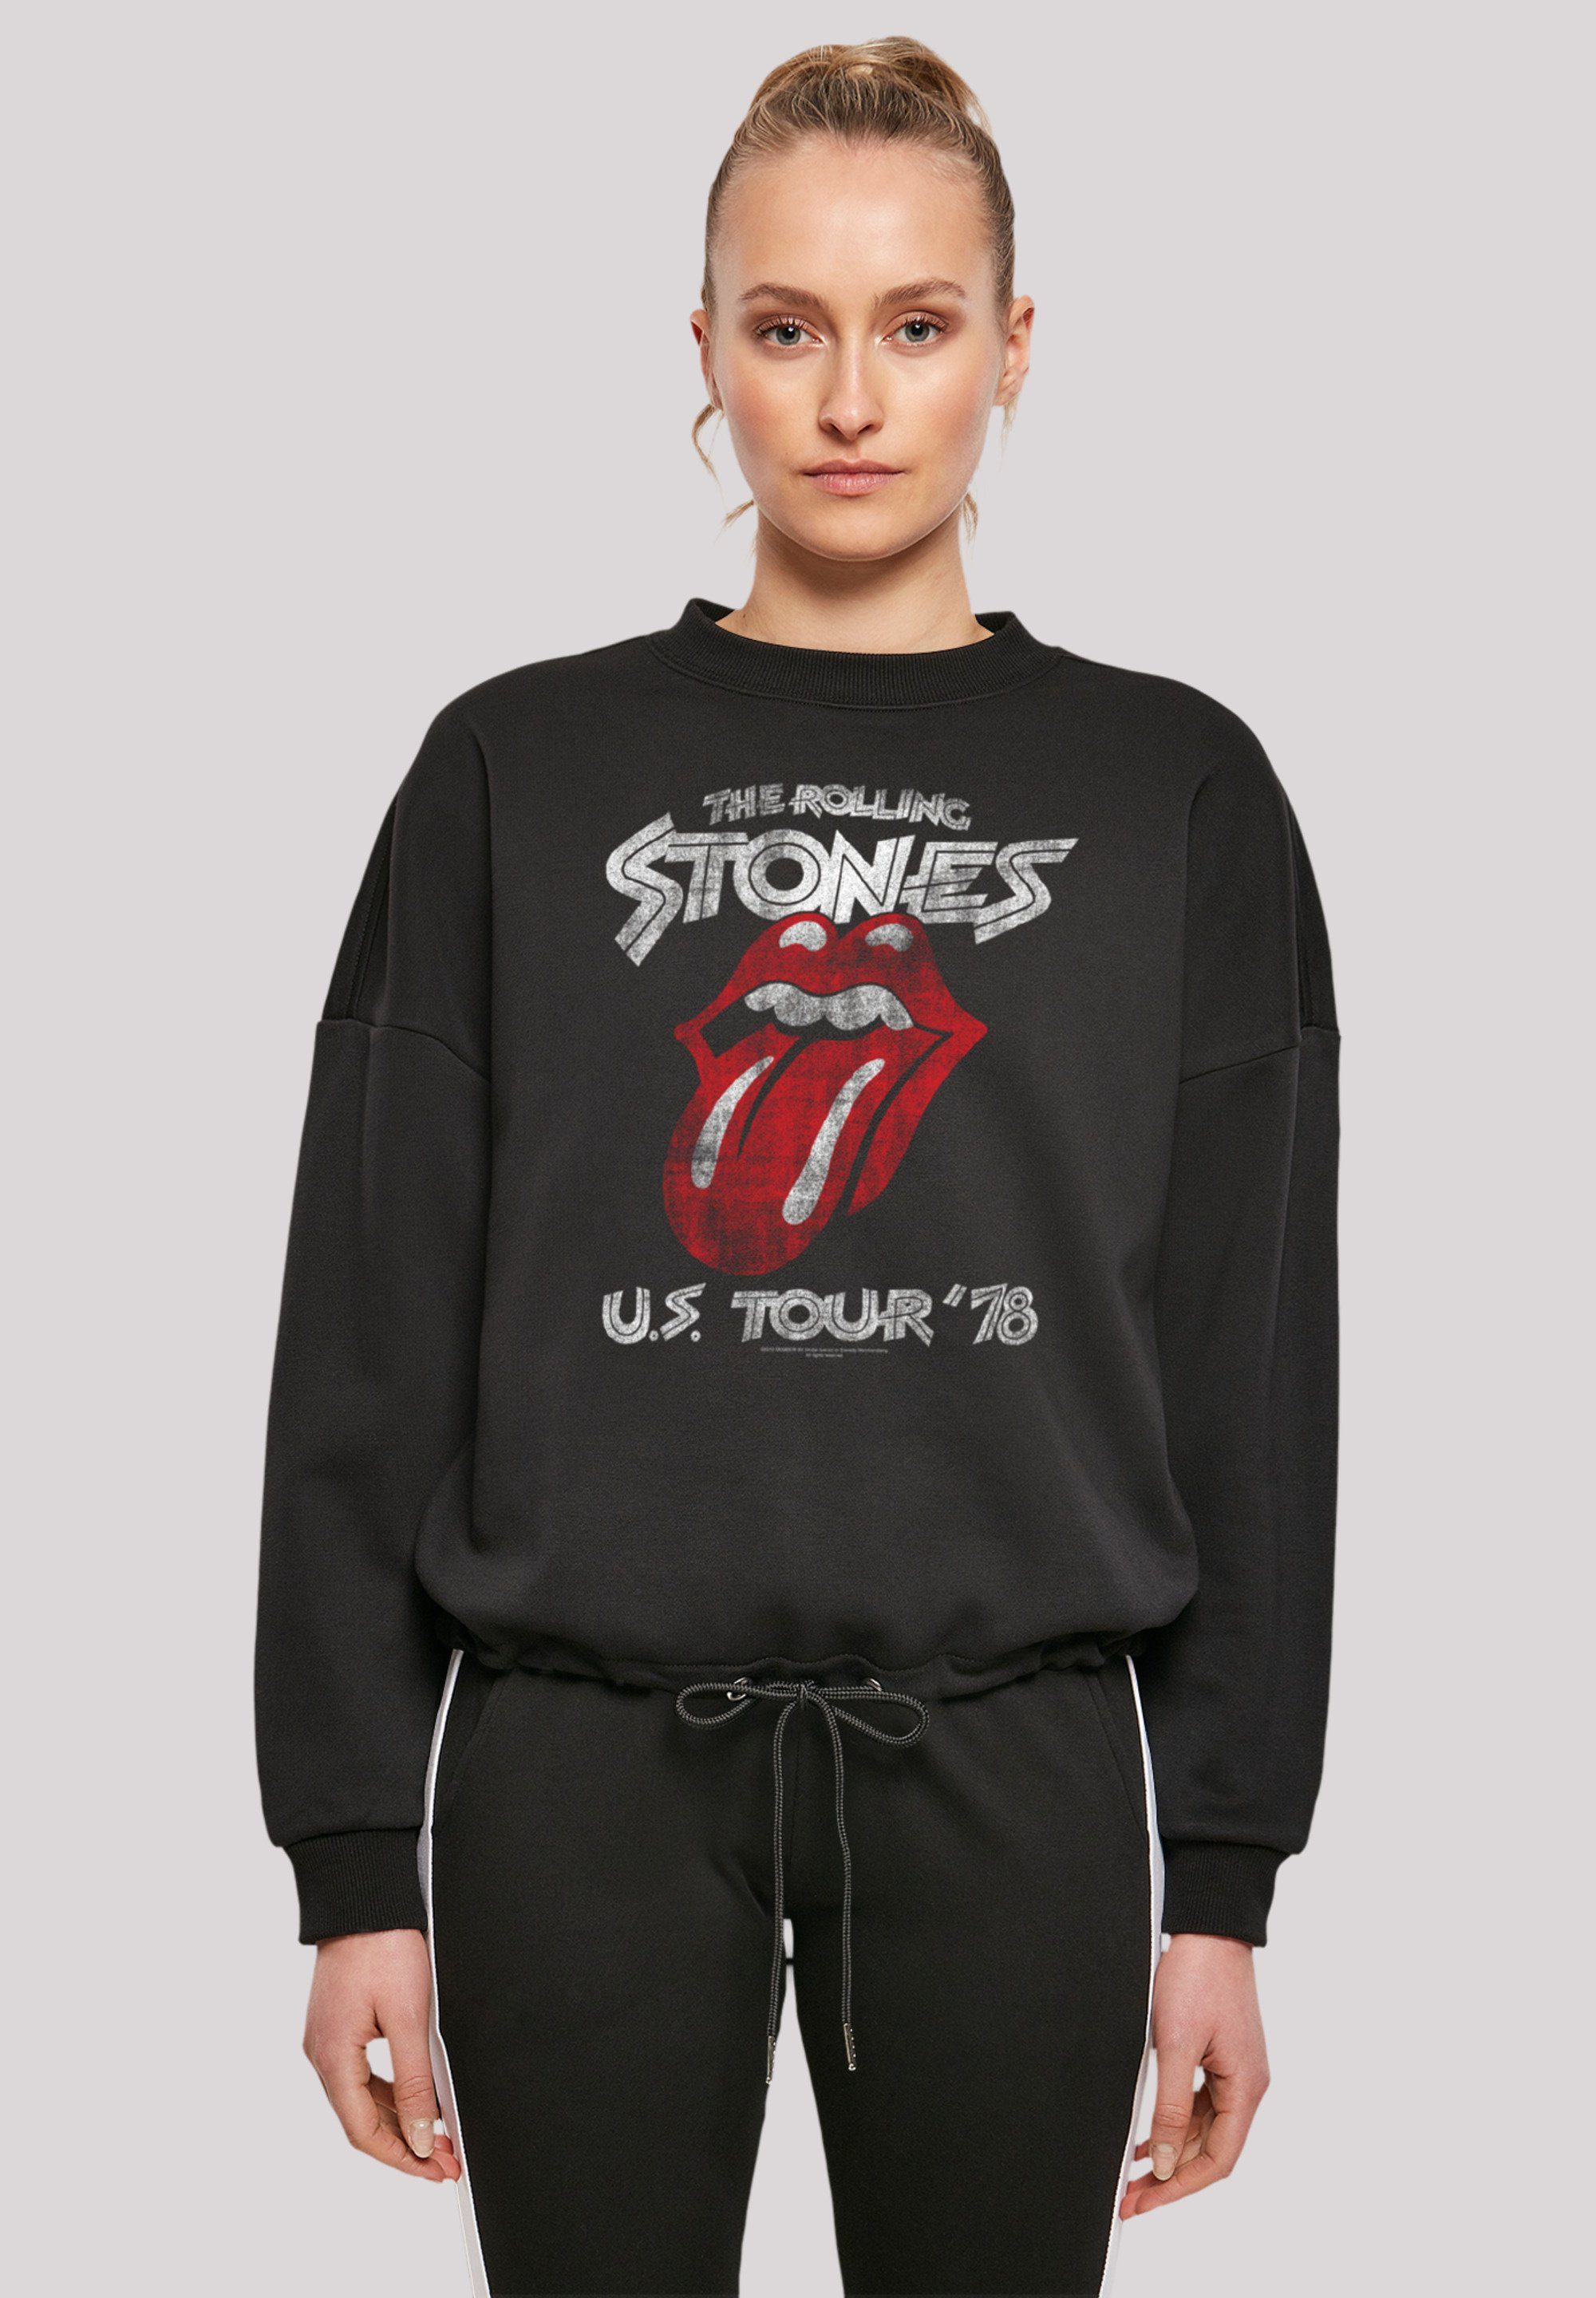 '78 The F4NT4STIC US Print Stones Tour Rolling Sweatshirt